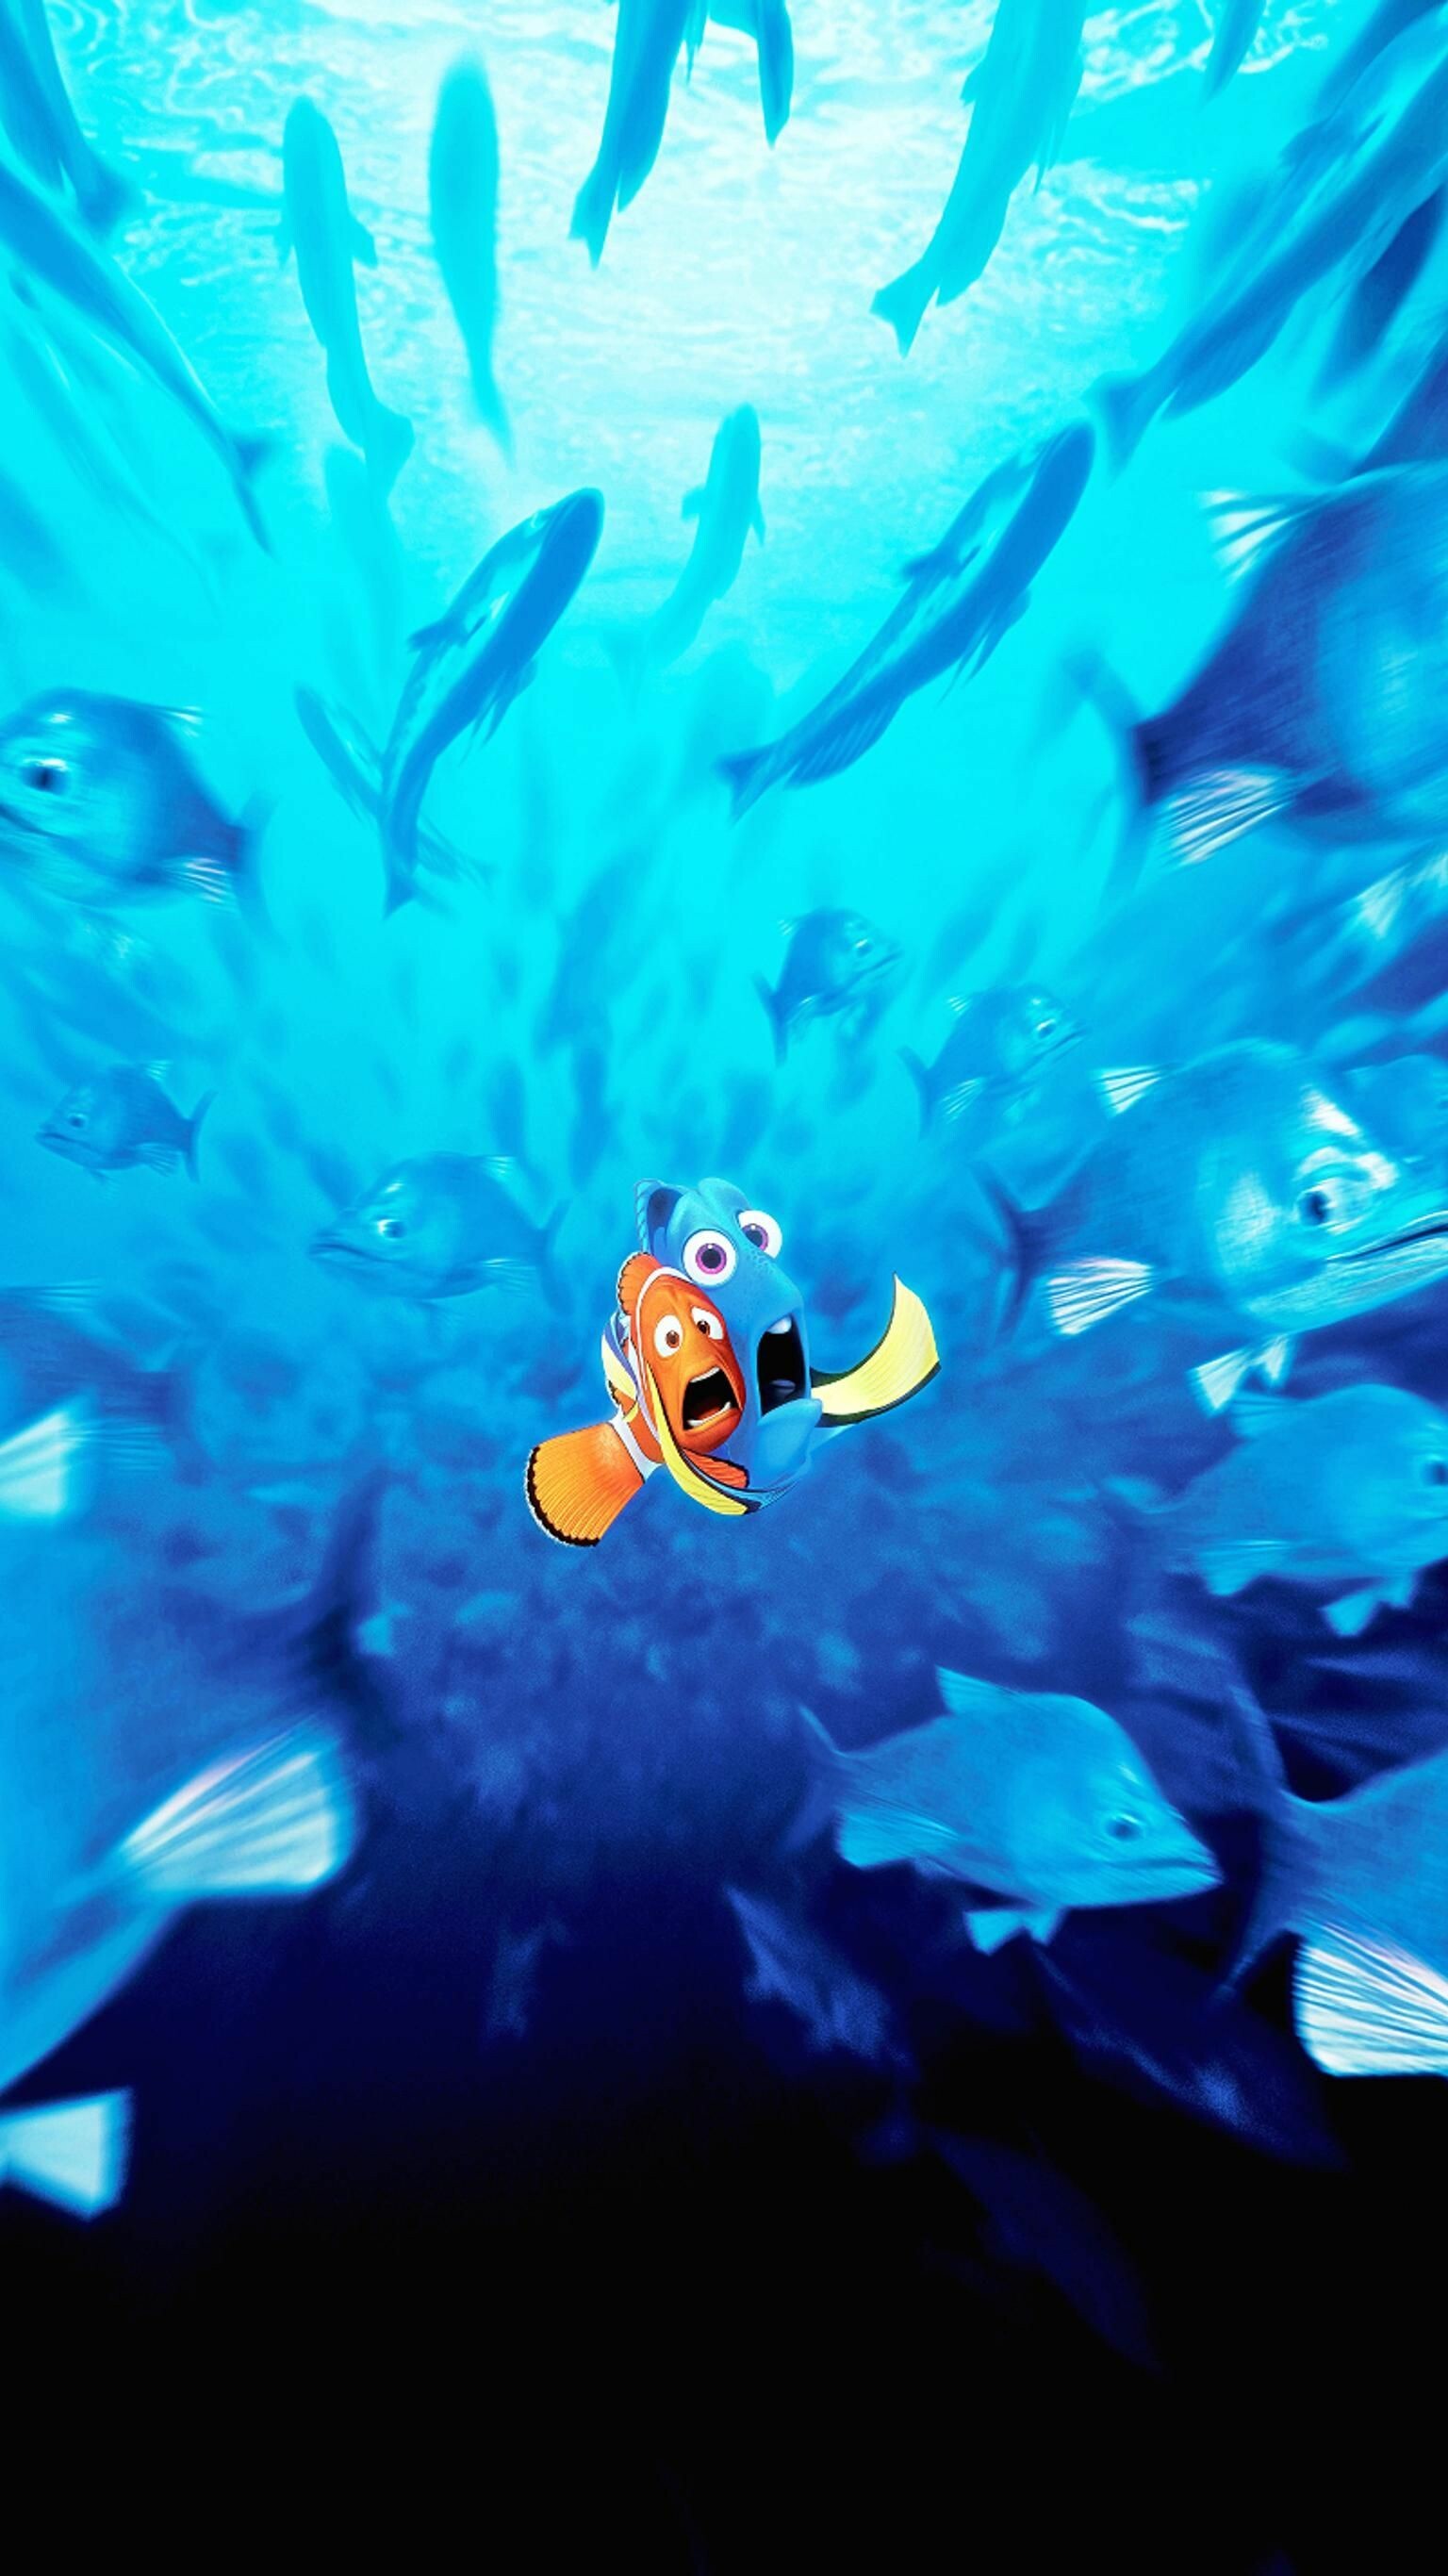 Finding Nemo: Dory, Marlin, A male clownfish. 1540x2740 HD Wallpaper.